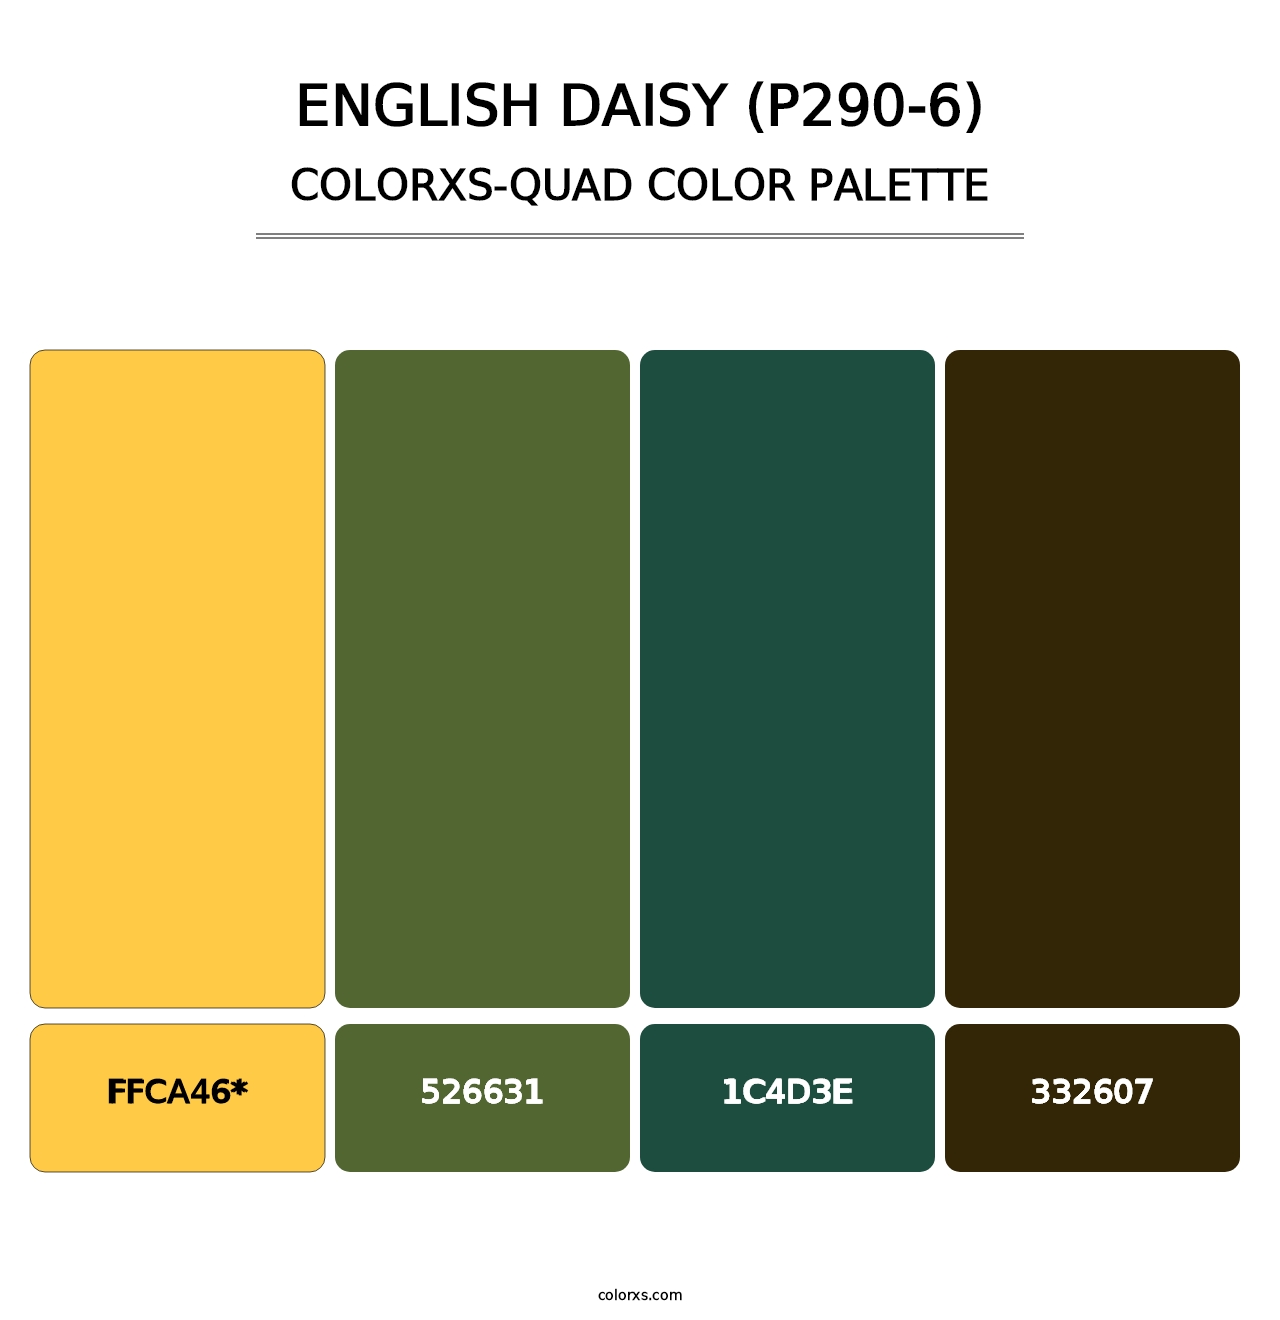 English Daisy (P290-6) - Colorxs Quad Palette